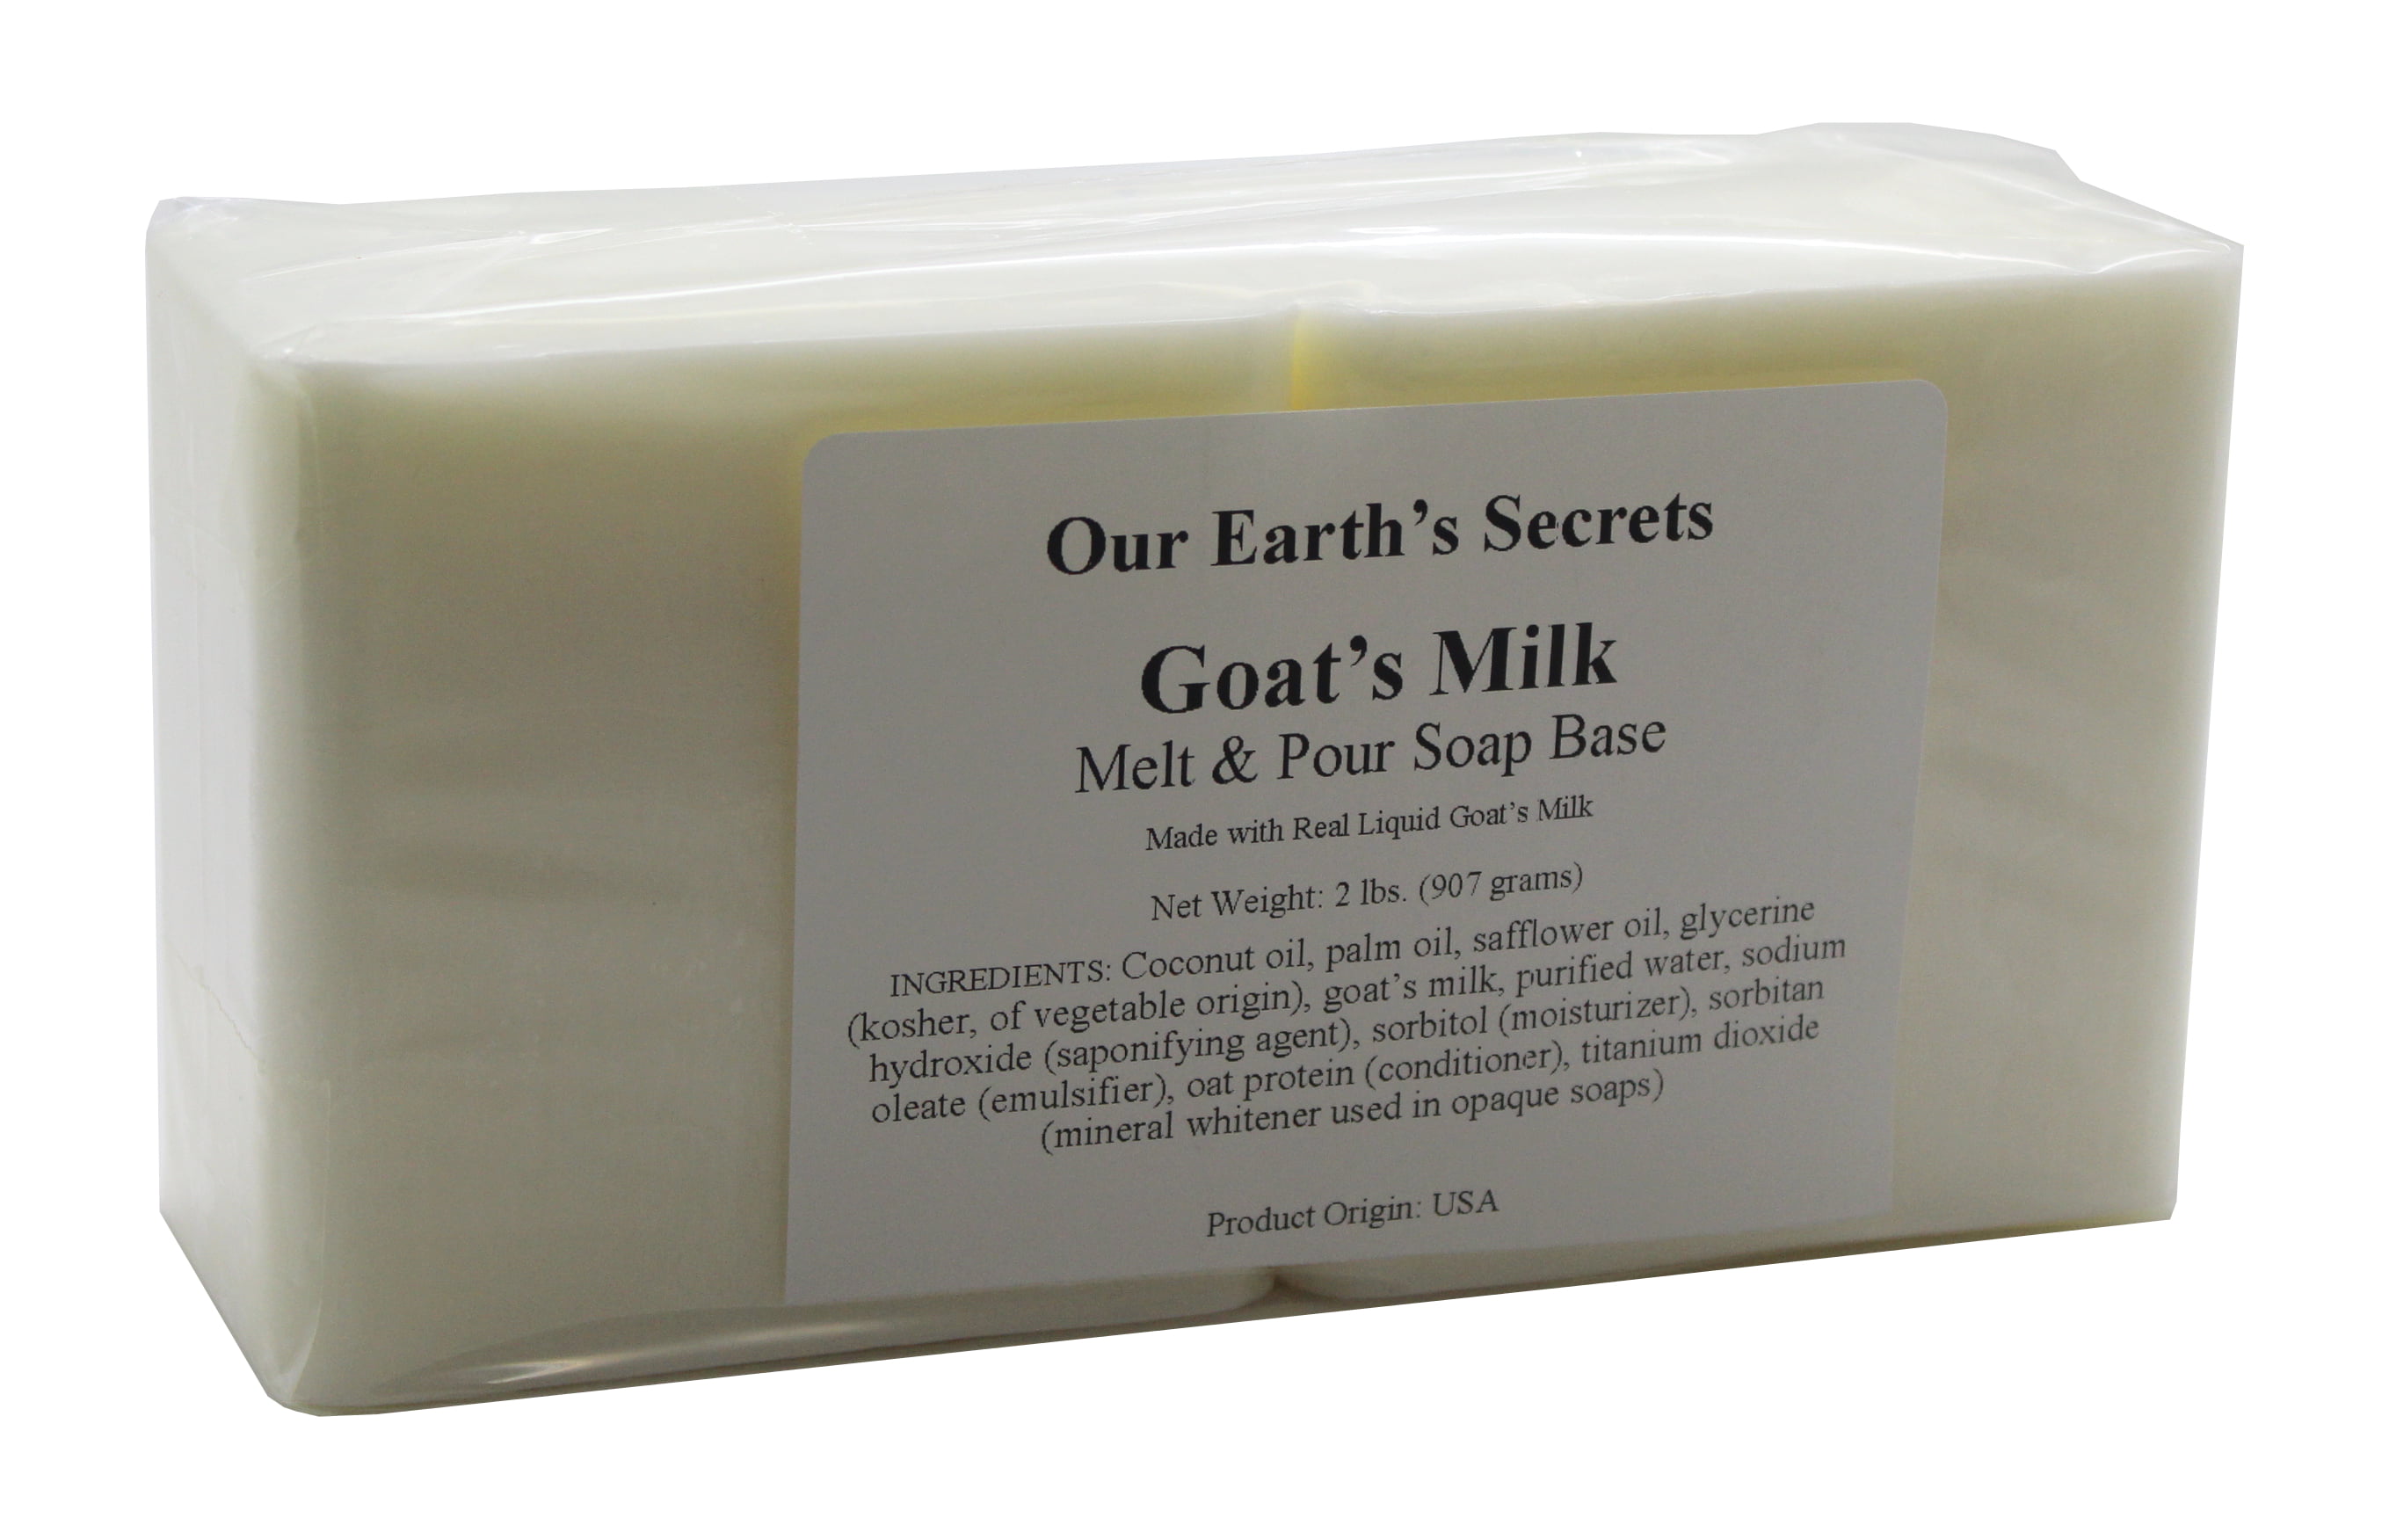 Goats Milk - 2 Lbs Melt and Pour Soap Base - Our Earth's Secrets 